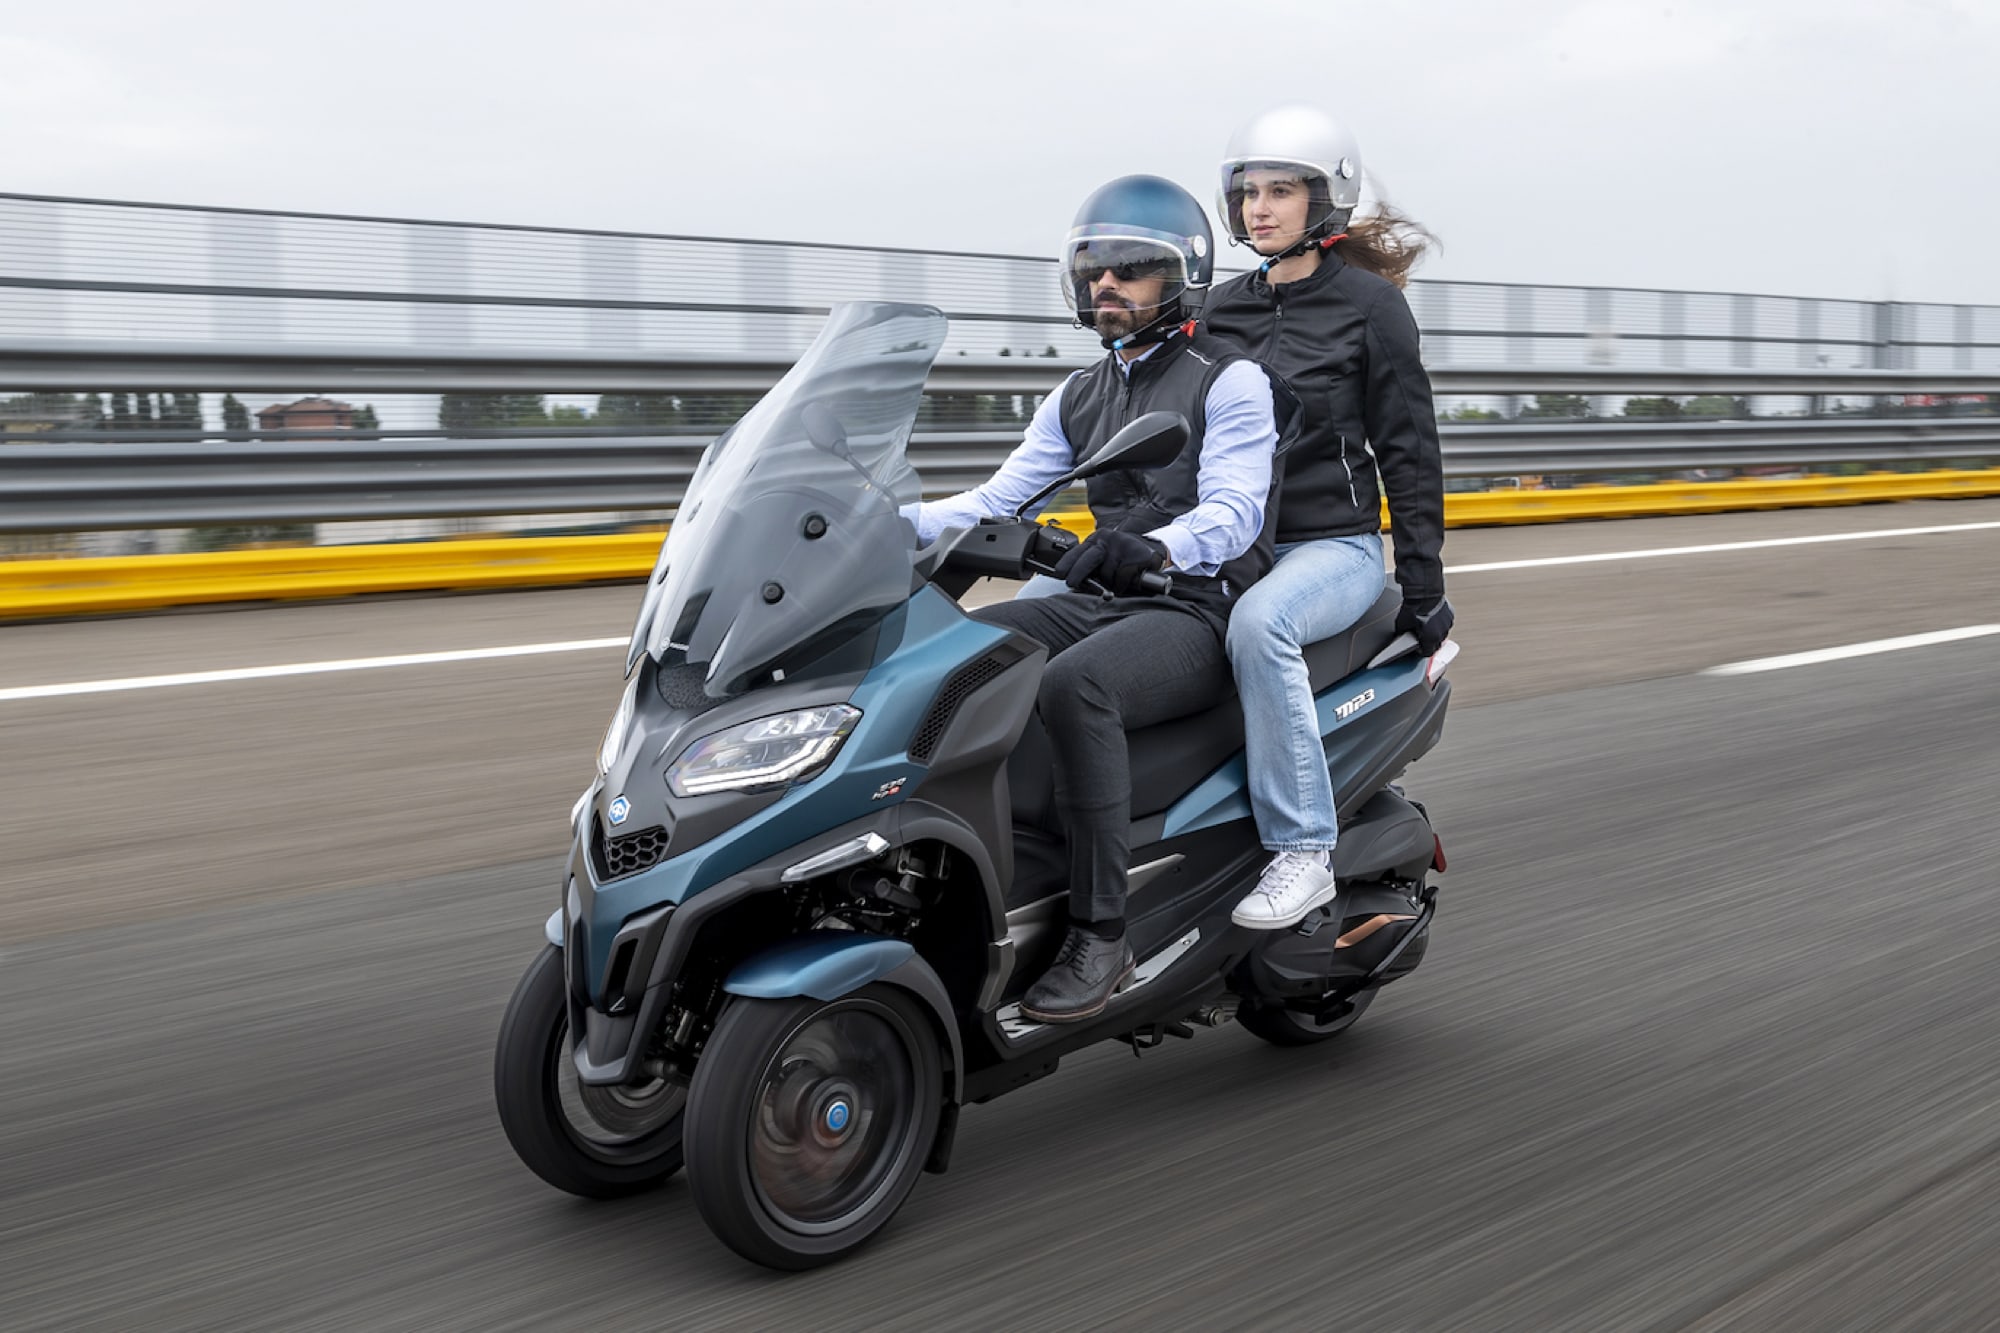 Piaggio endows new MP3 tilting 3-wheeler with first-in-class radar